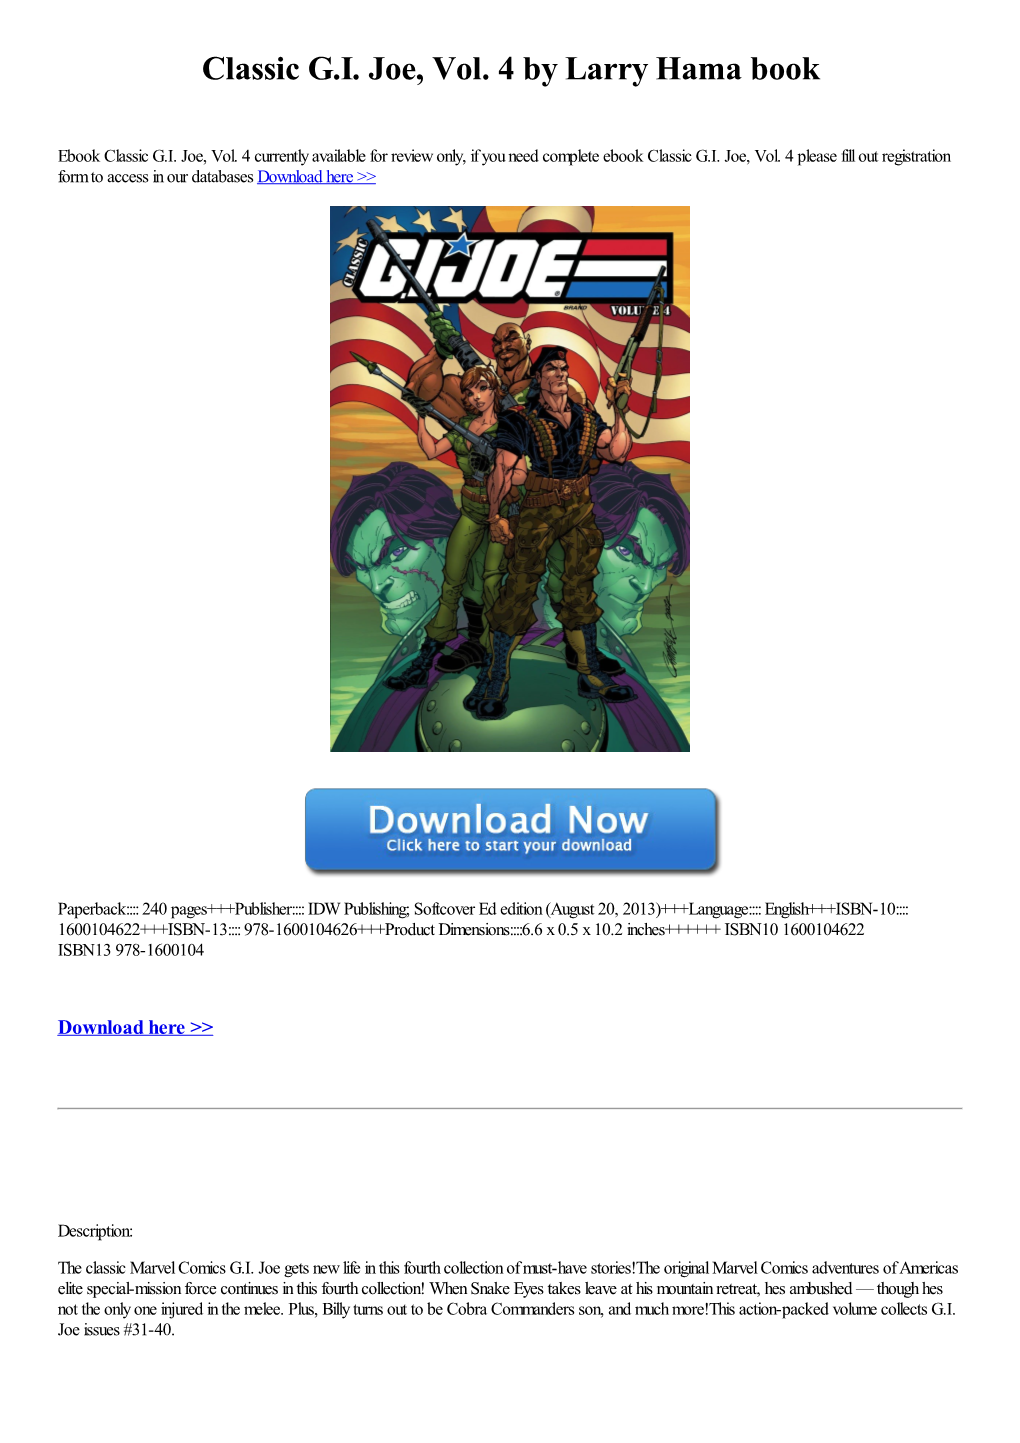 Download Classic G.I. Joe, Vol. 4 by Larry Hama